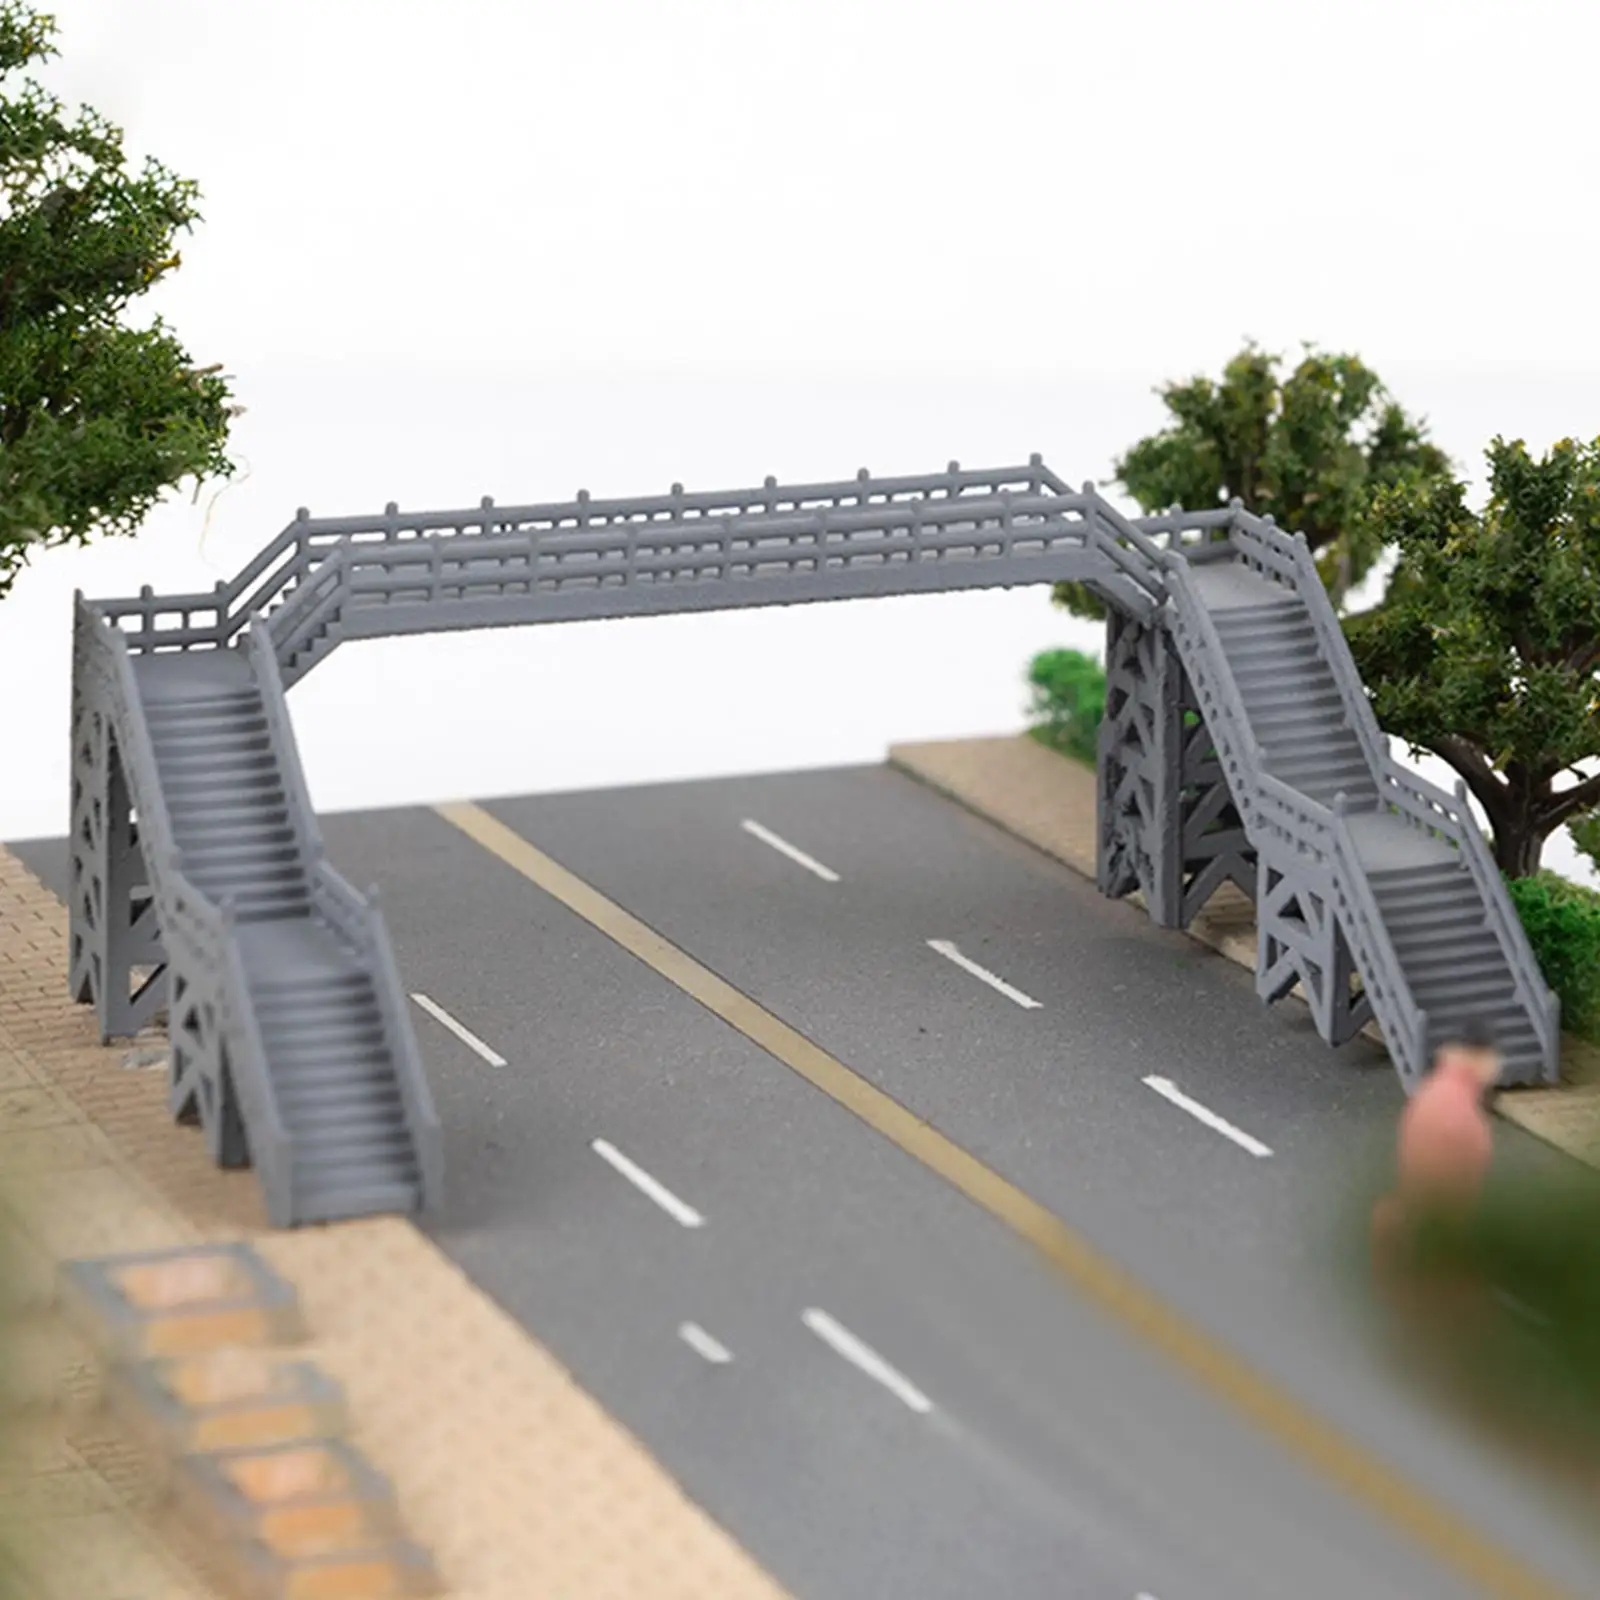 Miniature Train Footbridge Building Set for Model Railway Dioramas